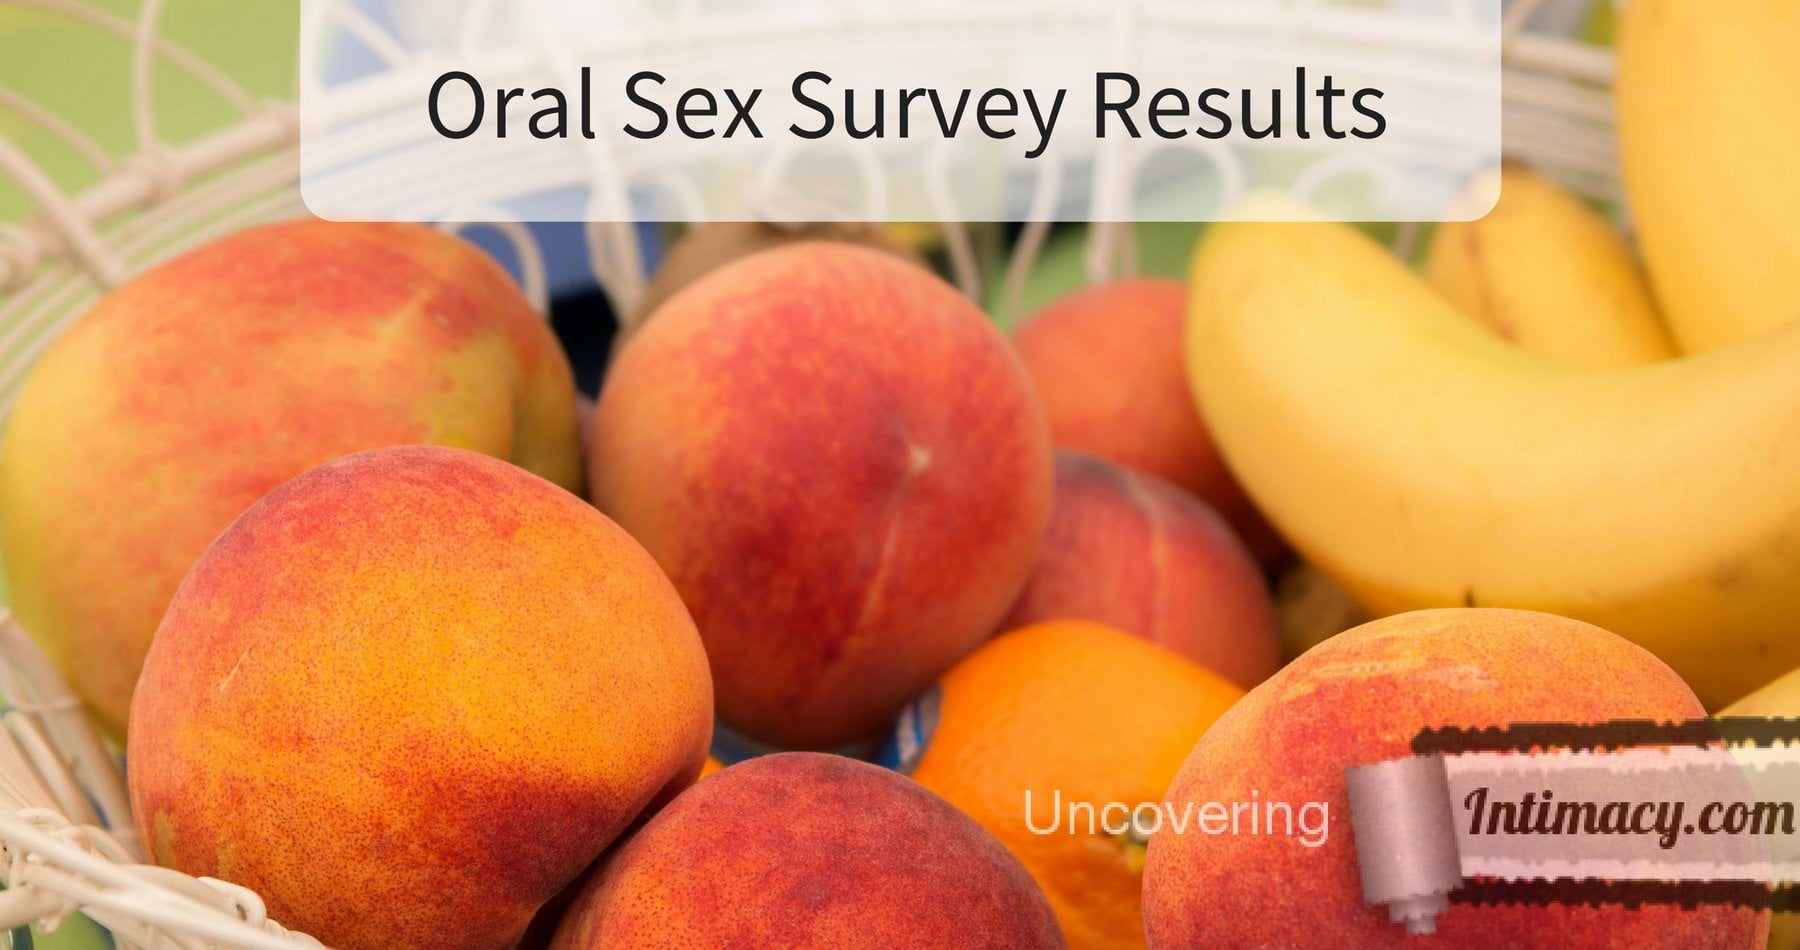 Oral Sex Survey Results photo image